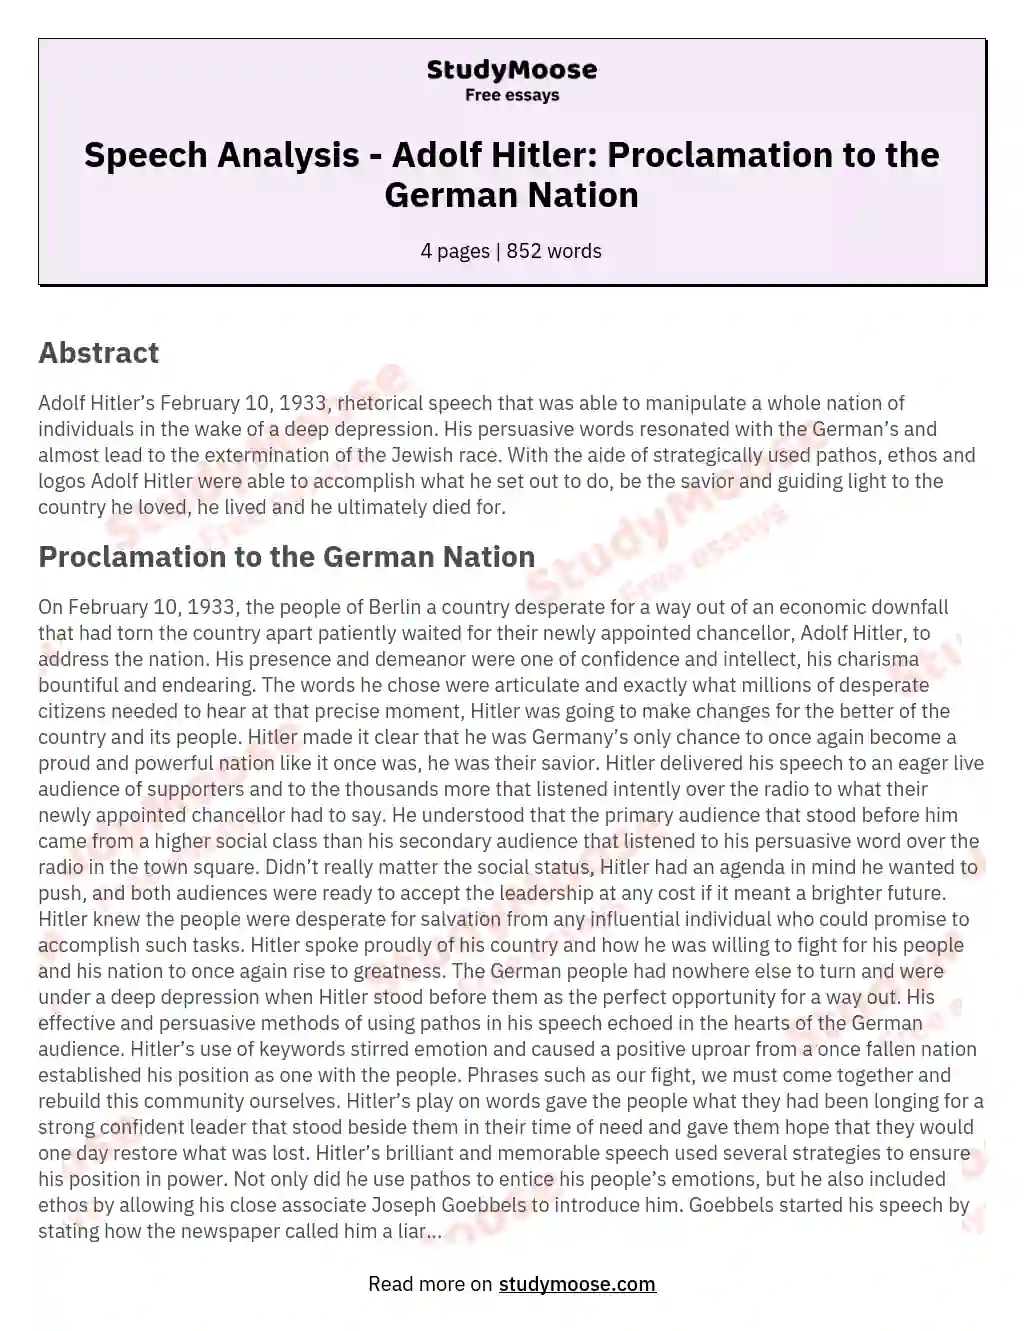 Speech Analysis - Adolf Hitler: Proclamation to the German Nation